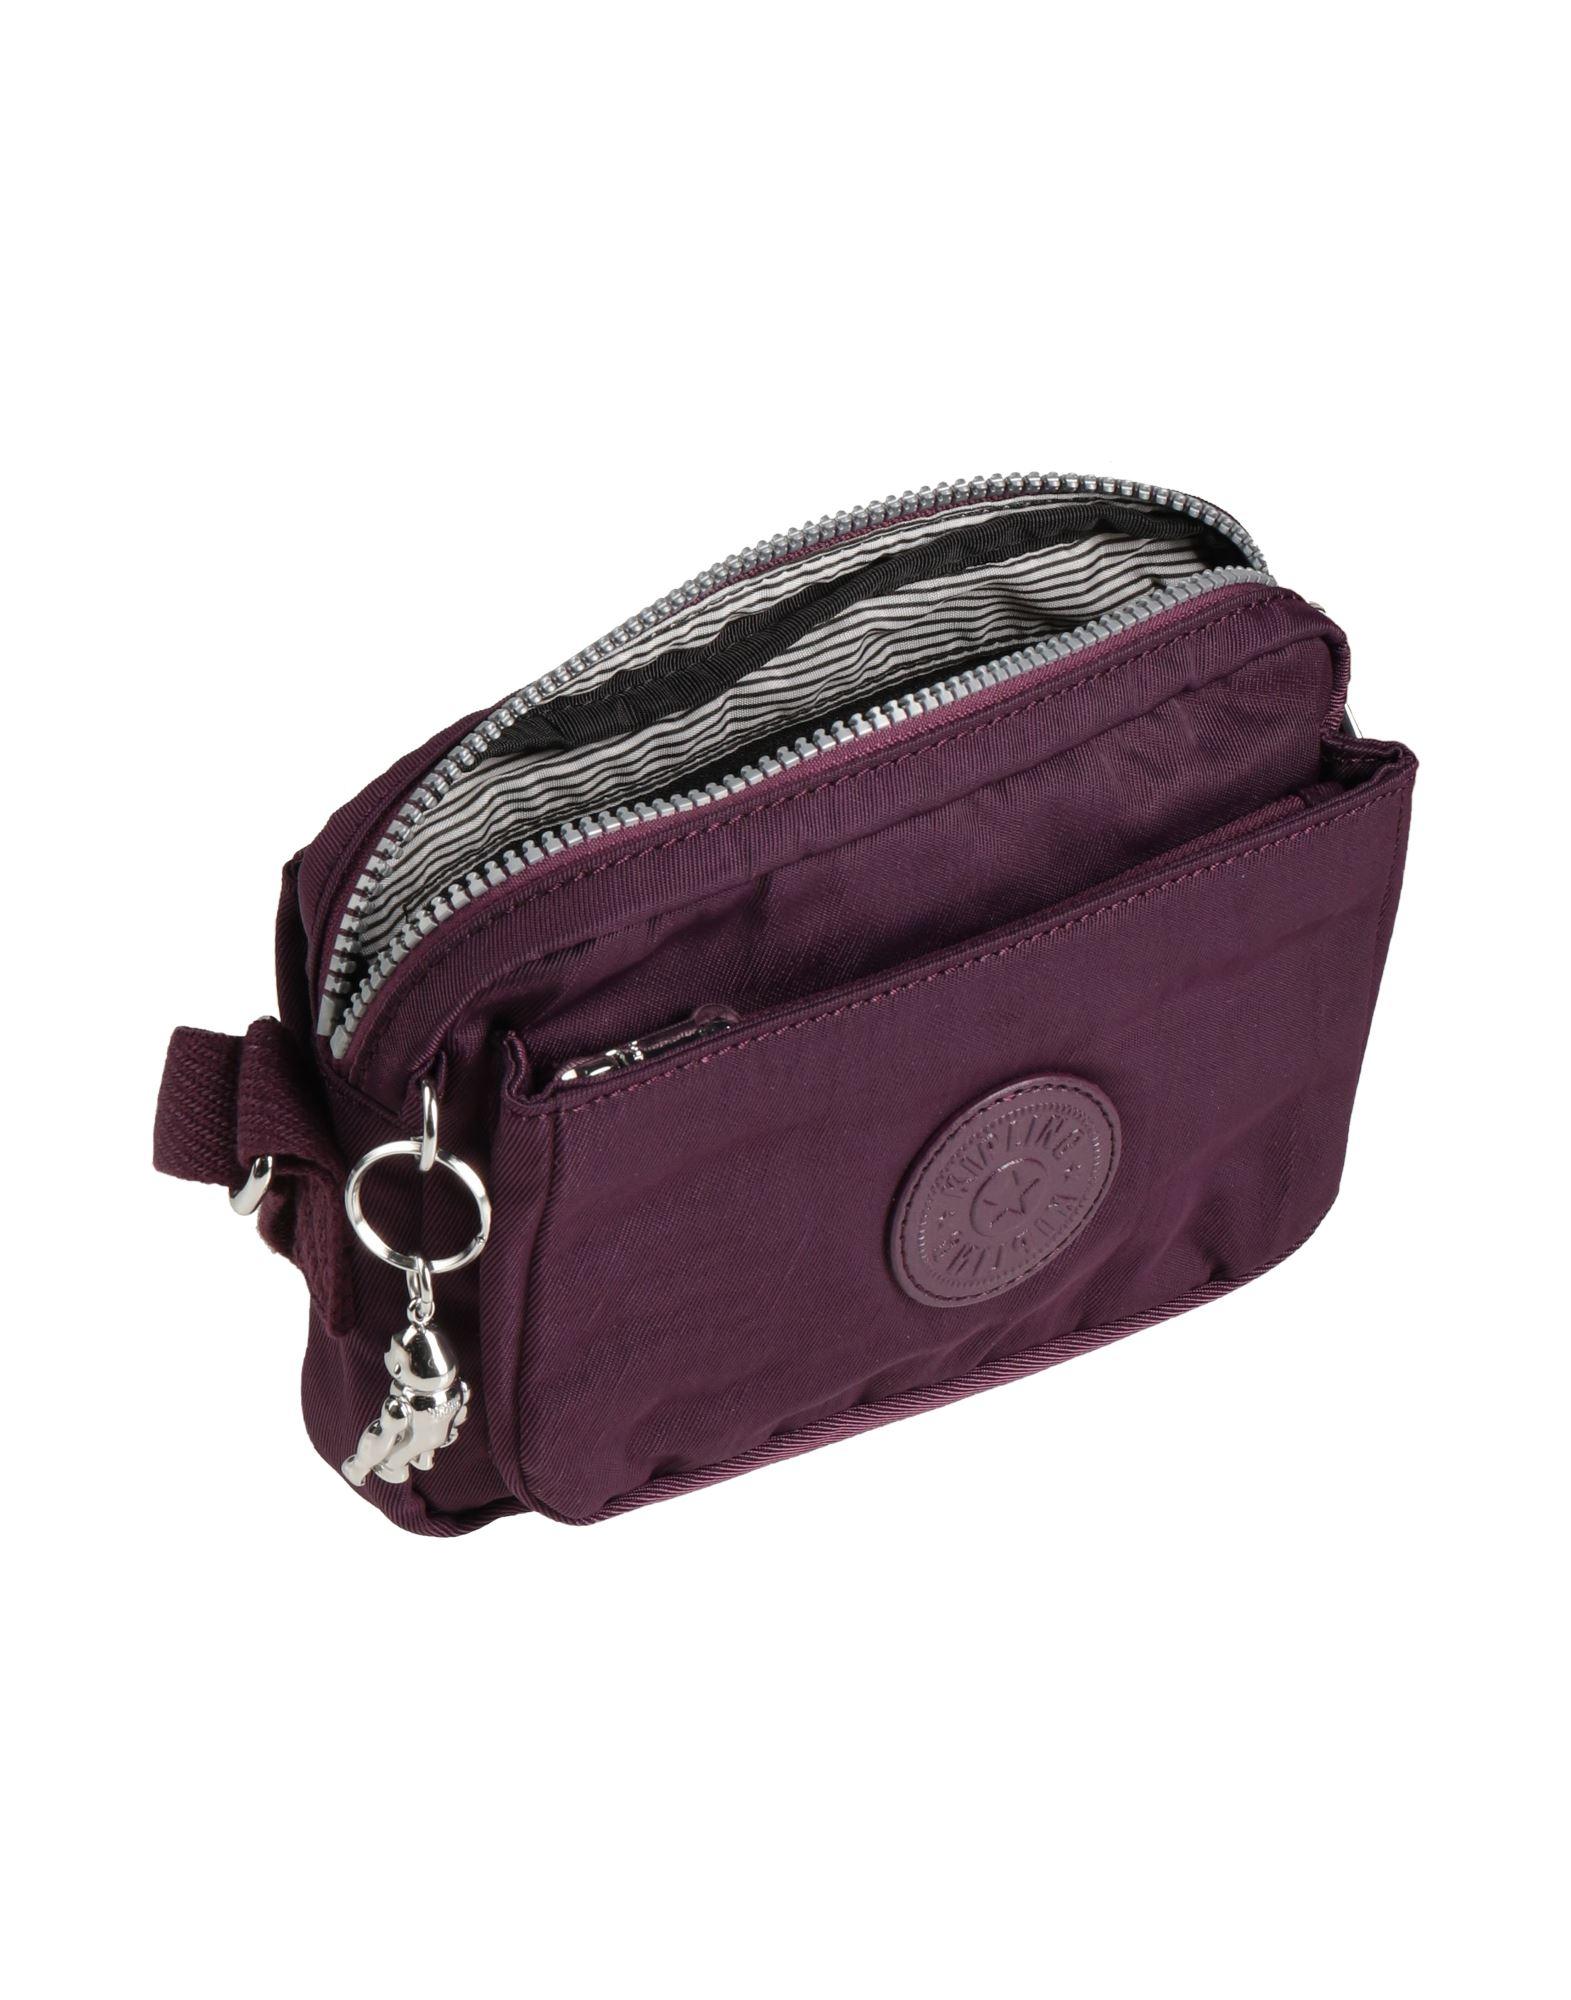 Kipling Unisex-Adult Women's Eugina Satchel, Handmade, Removable Shoulder  Strap, Outer Pockets, Nylon Duffle Bag Duffel, Precisely Purple, One Size |  Bags, Satchel, Kipling bags